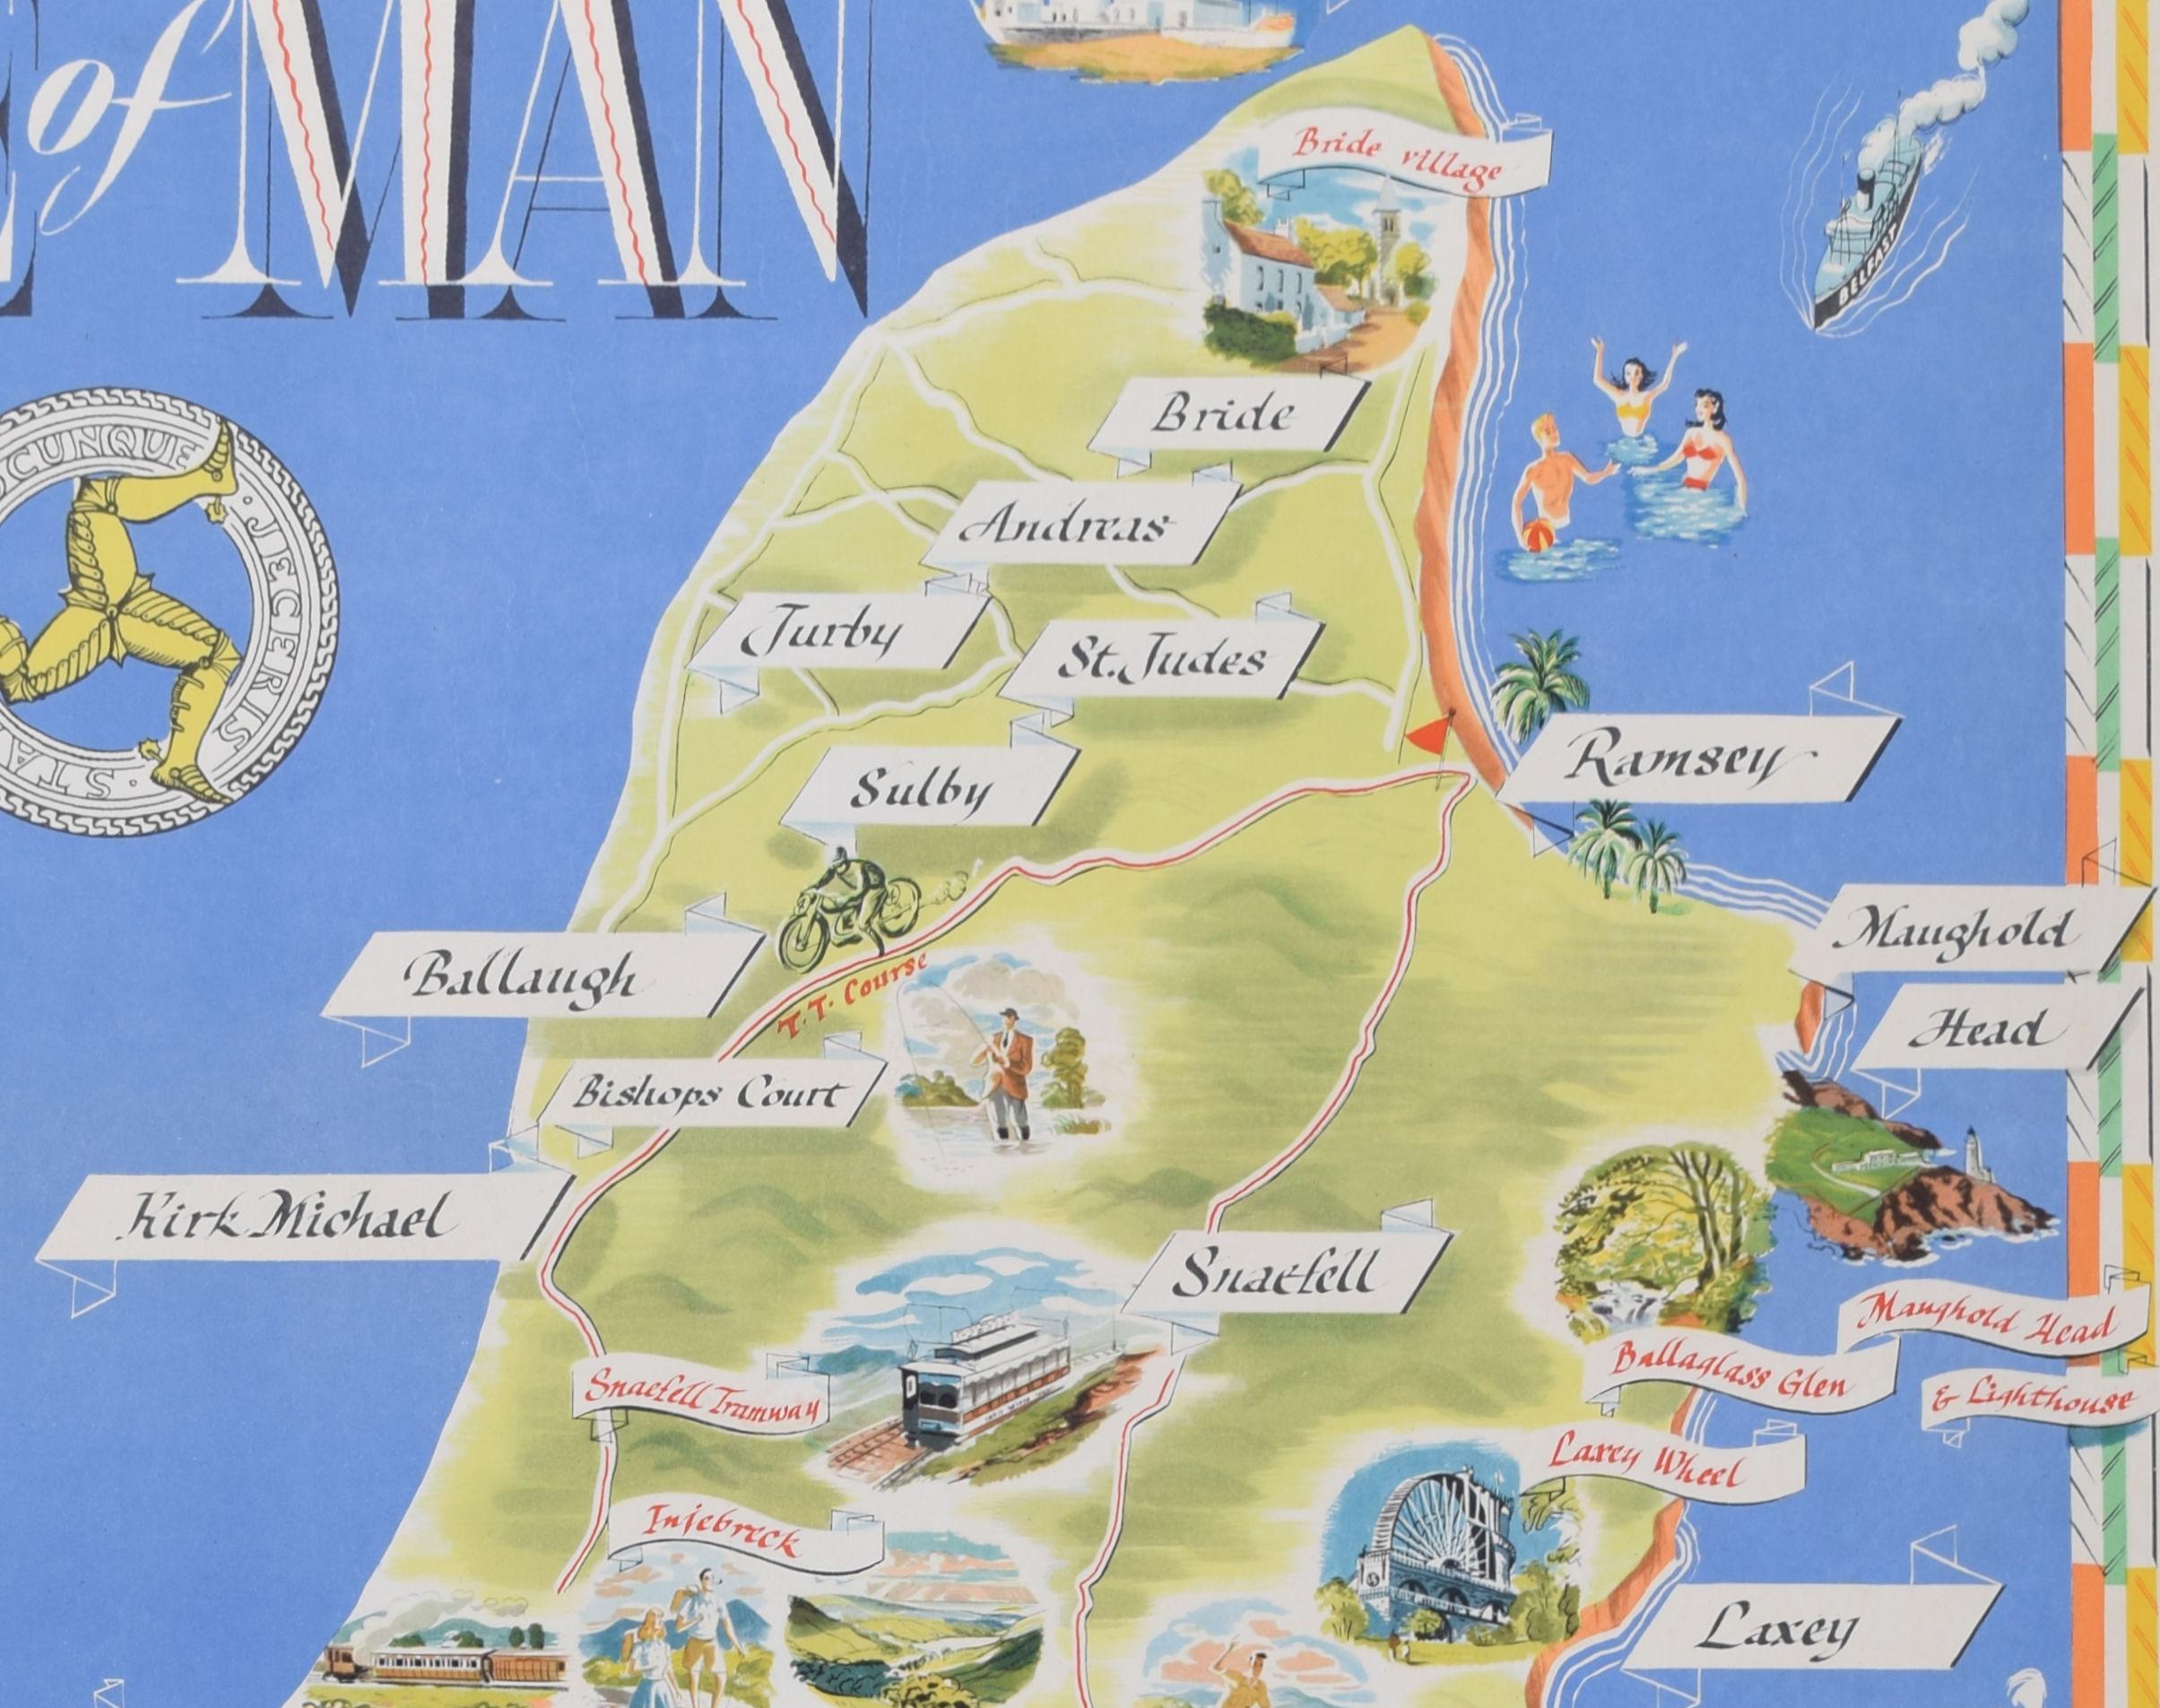 Isle of Man original vintage poster by Gordon Davey For Sale 2